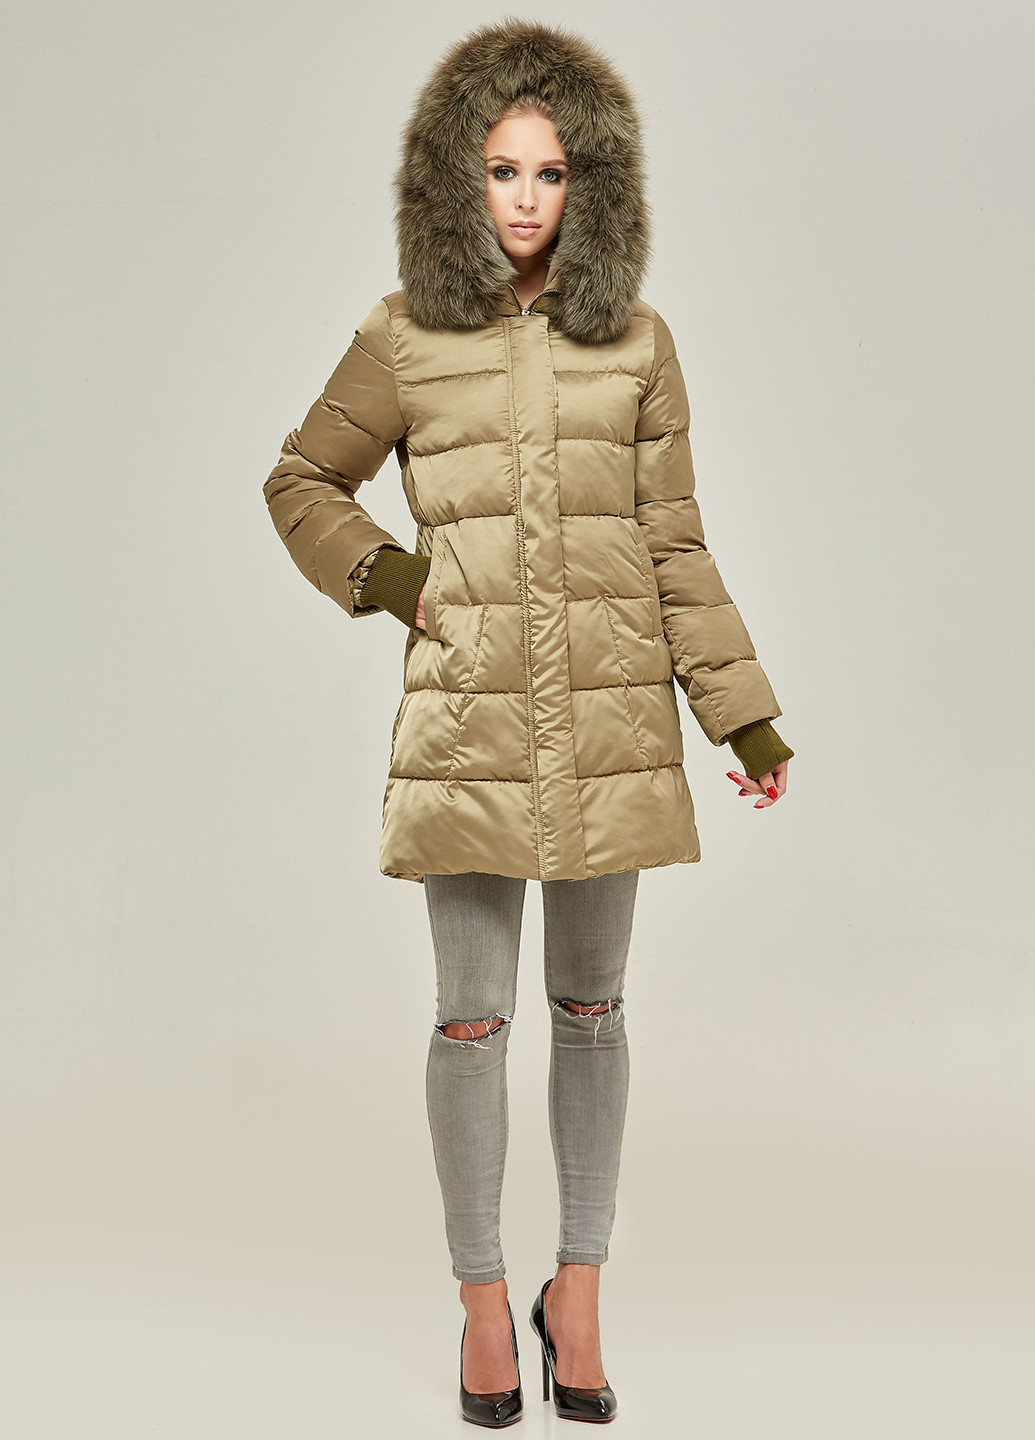 Оливковая зимняя куртка (мех песца) MN